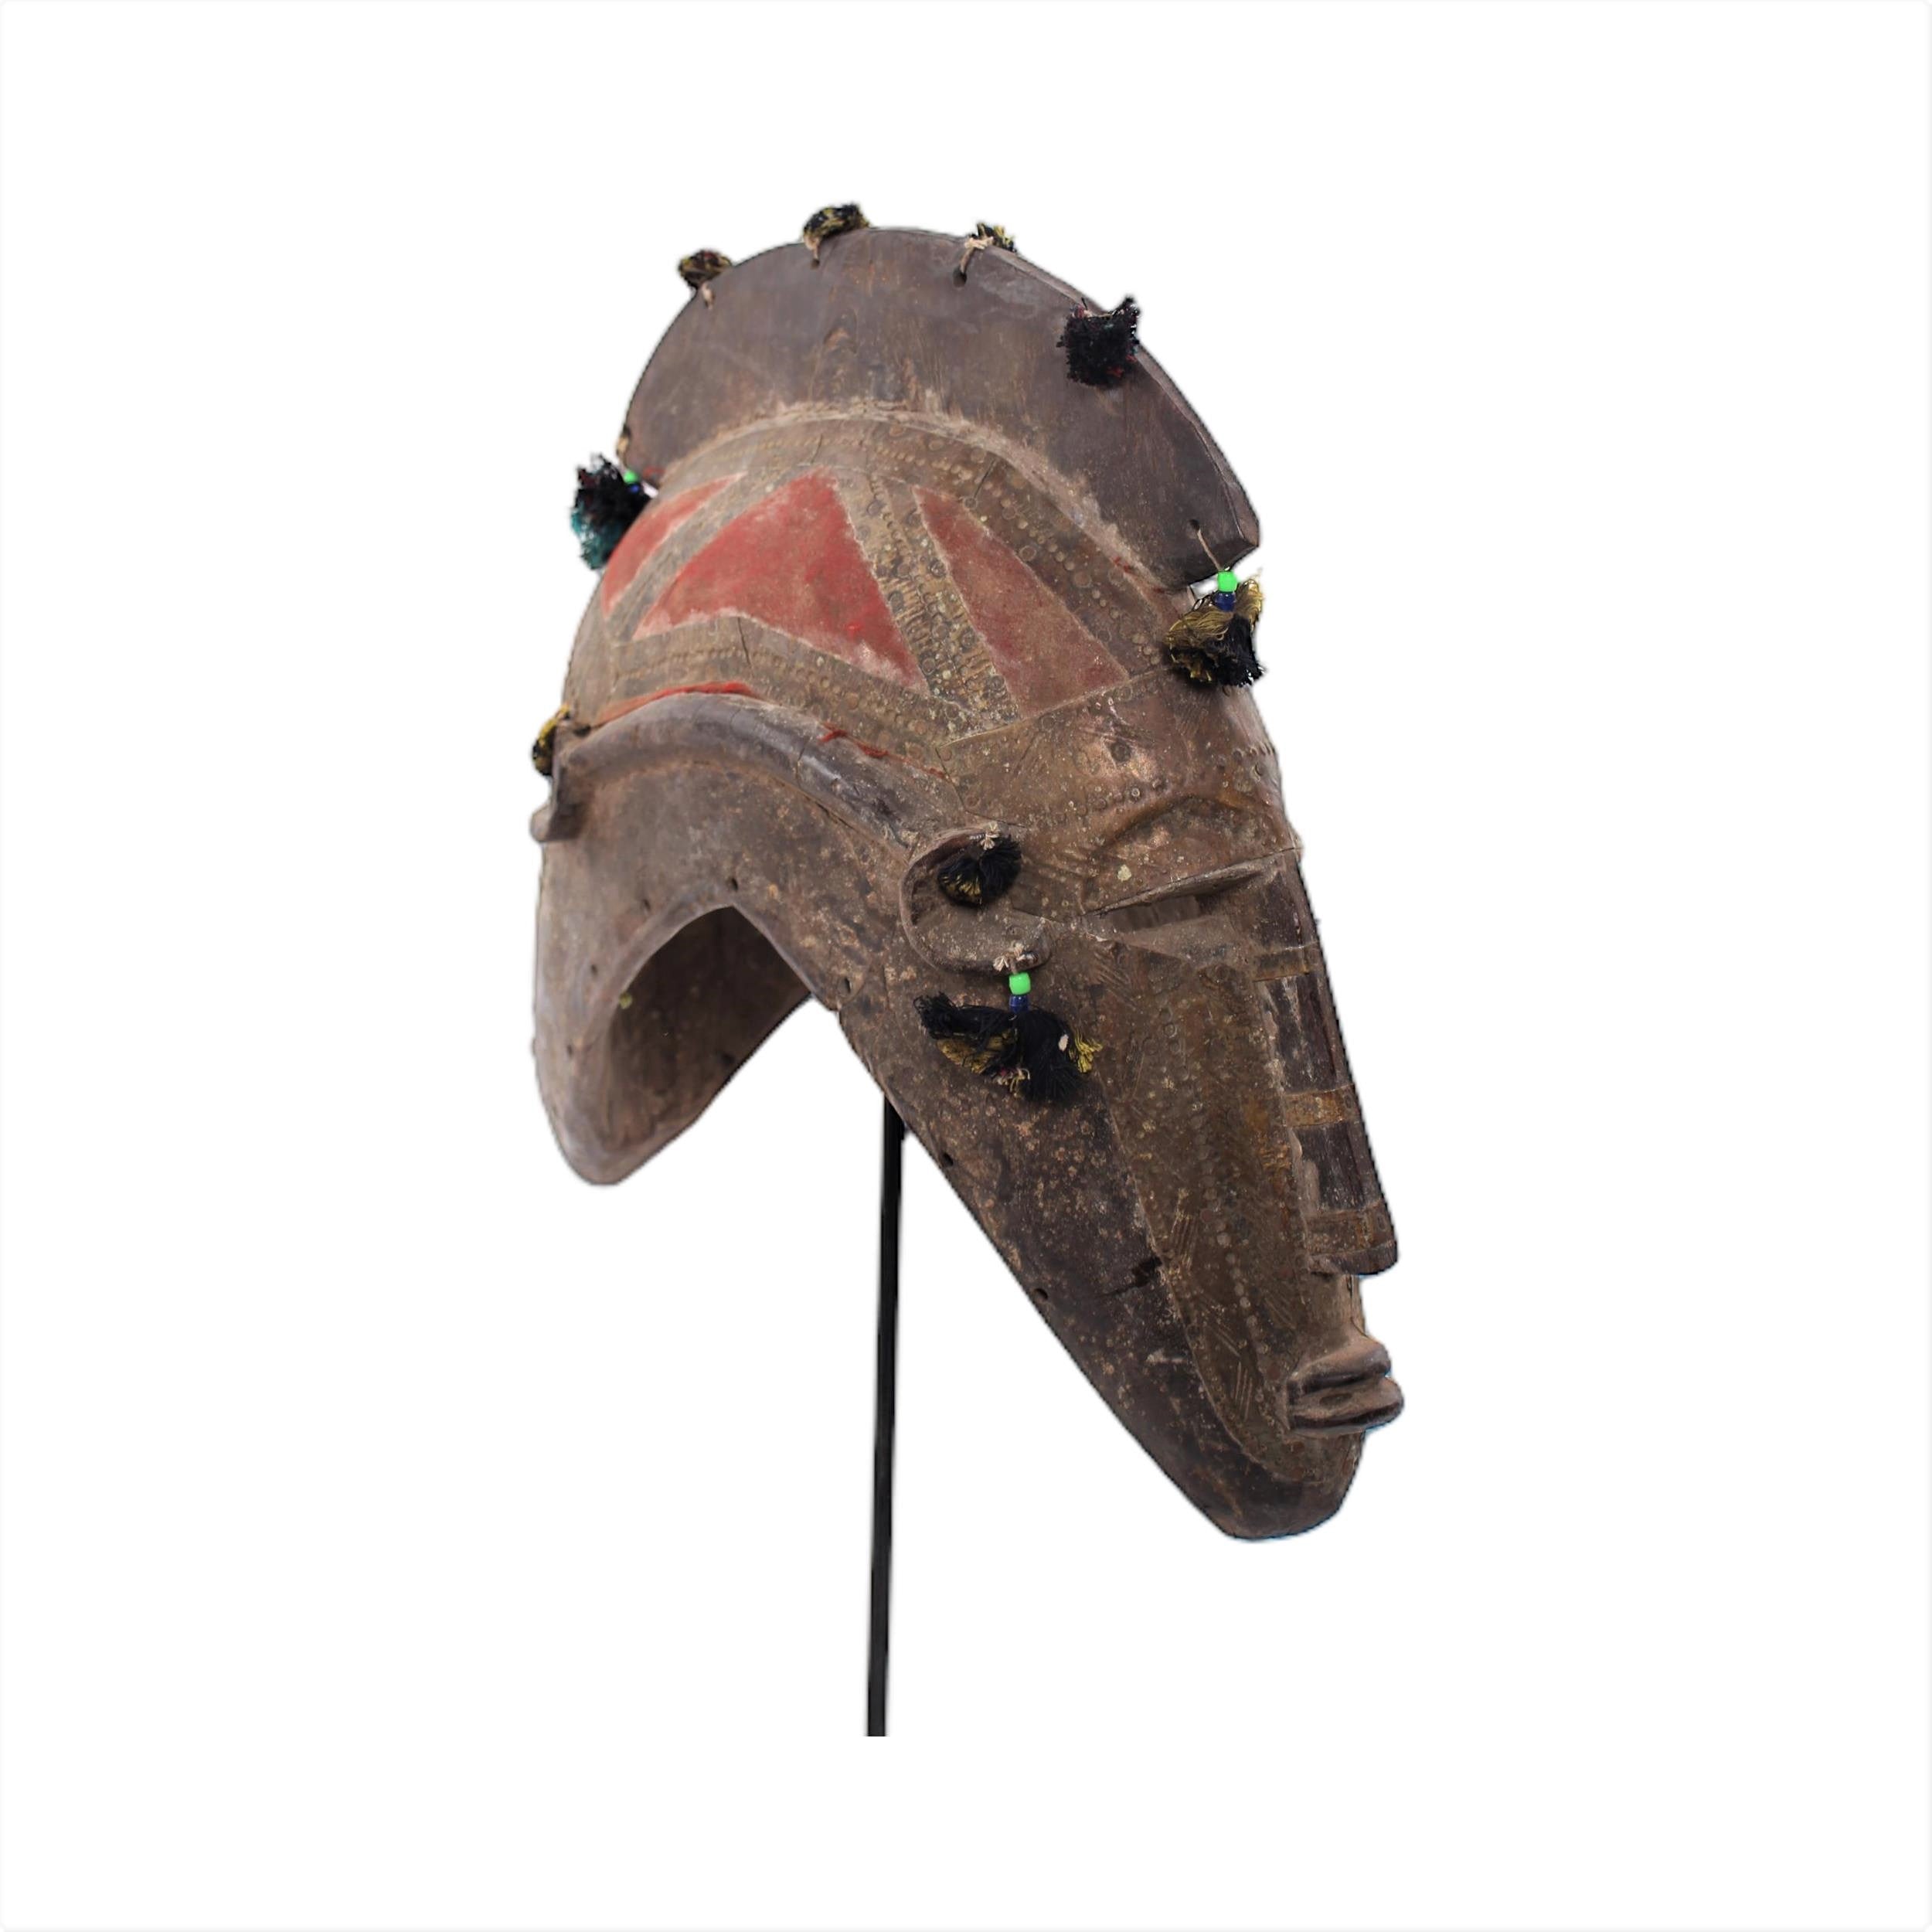 Marka Tribe Mask ~25.6" Tall - Mask